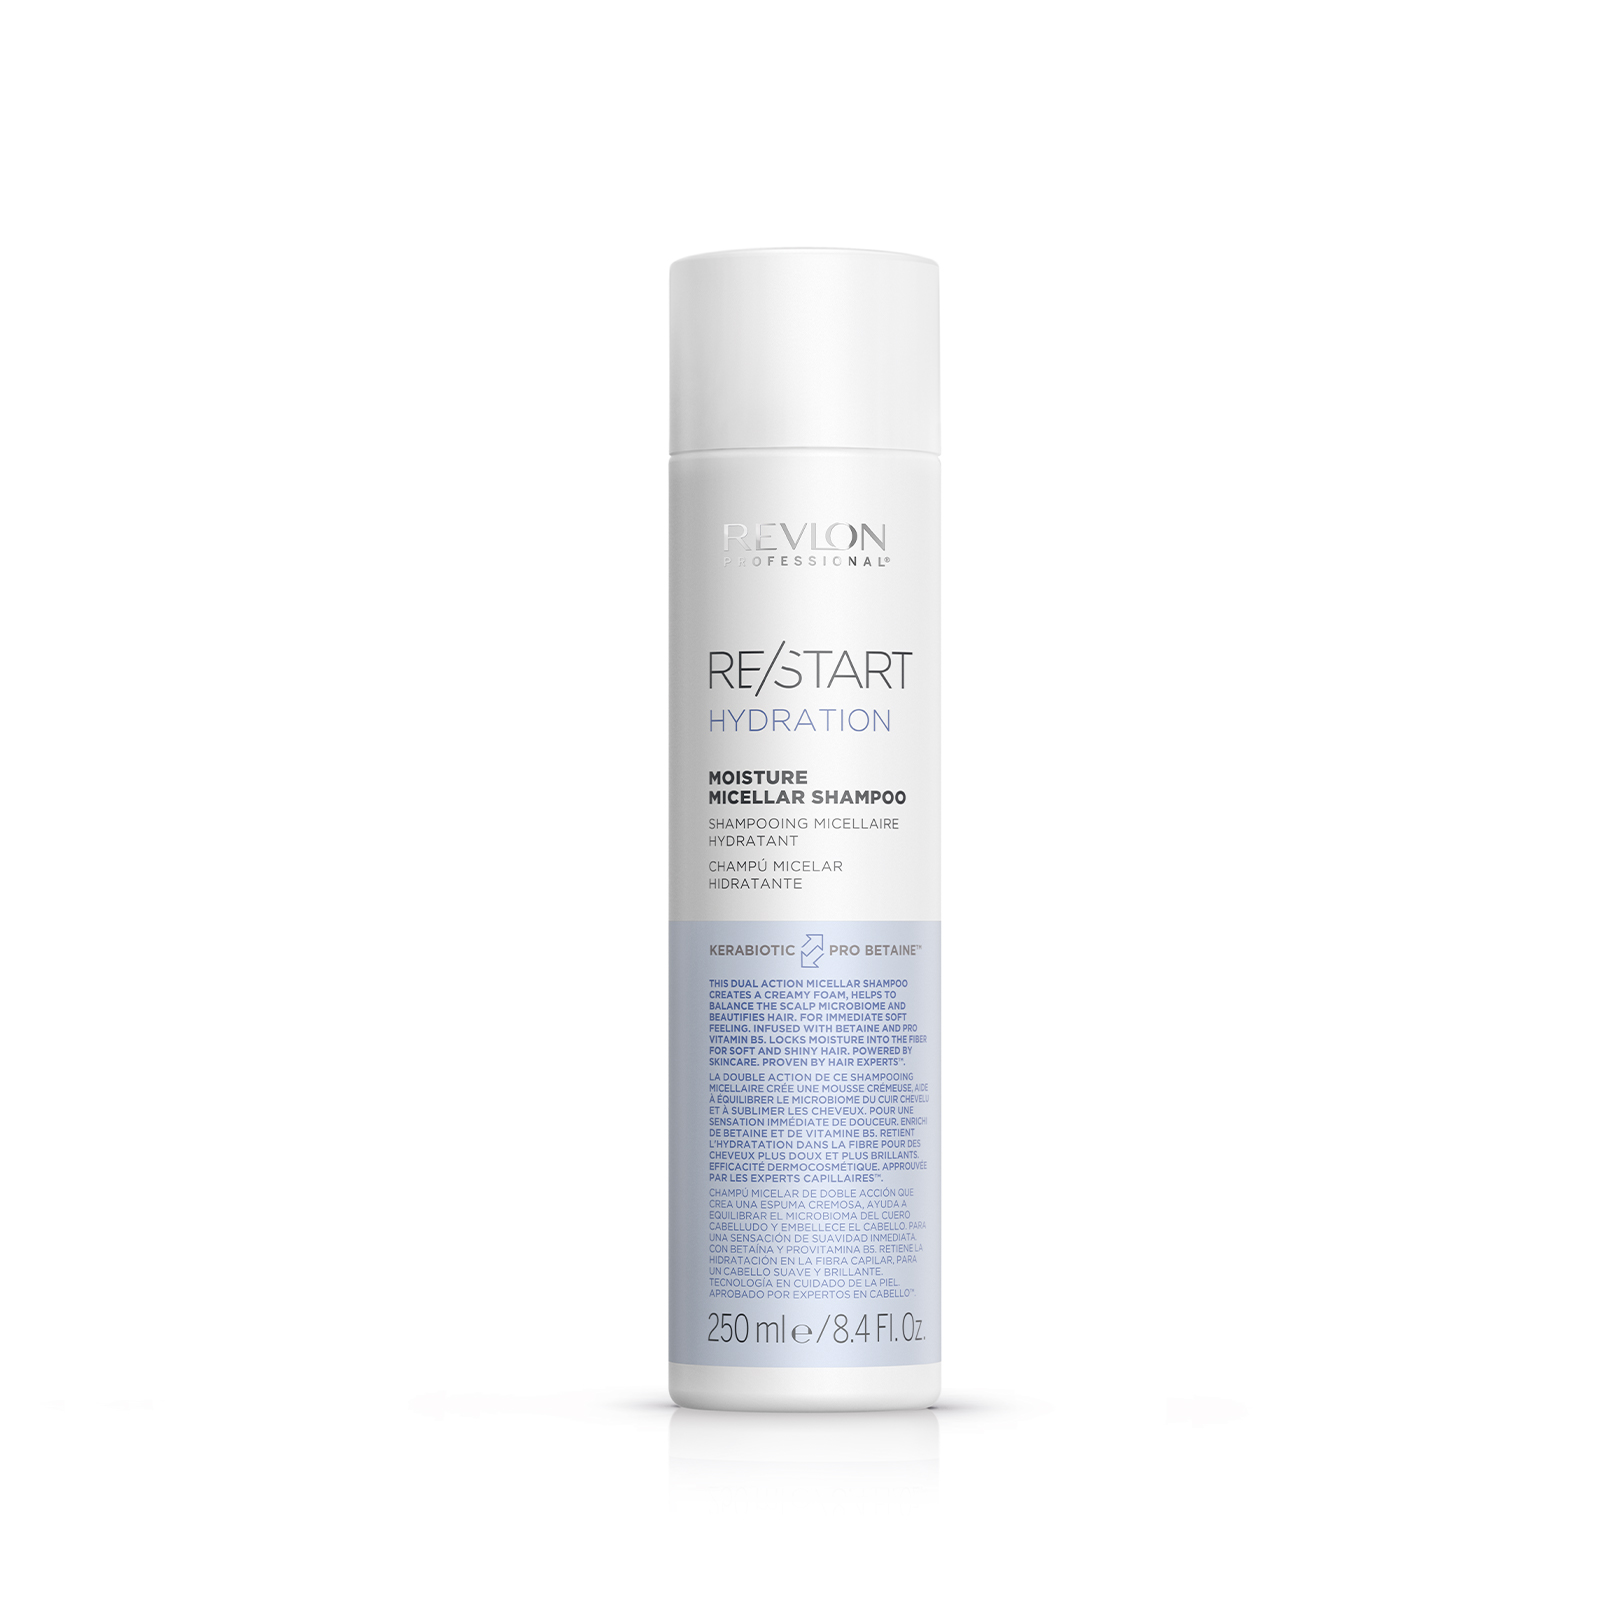 RE/START™ Hydration Shampoo - Professional Moisture Revlon Micellar